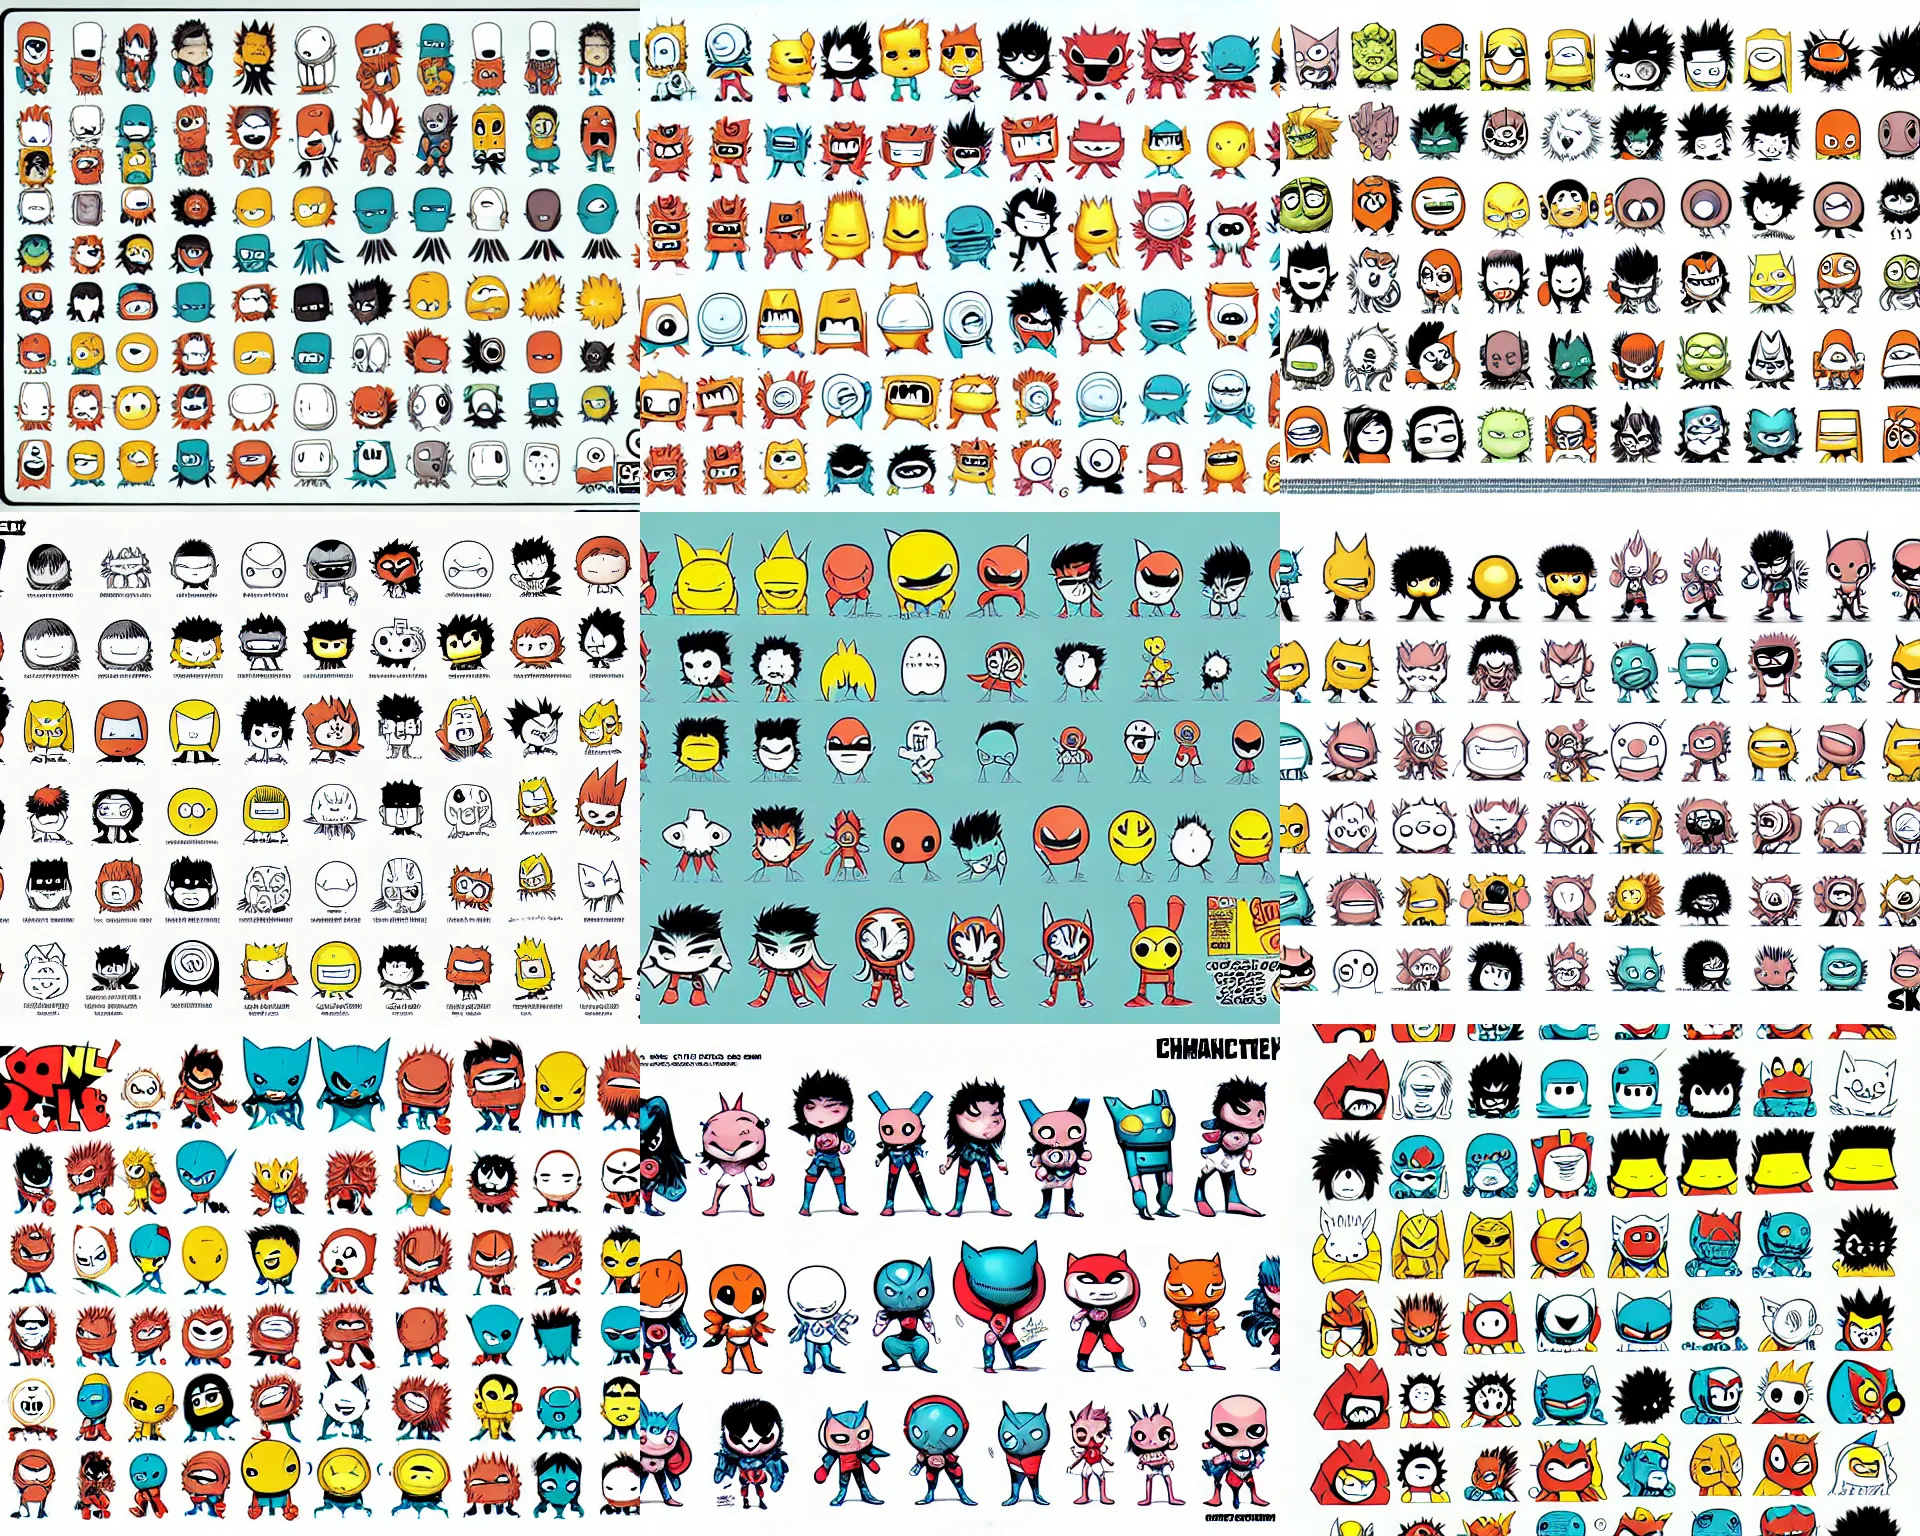 Prompt: character sheet of cute comic book characters, artgem, skottie young